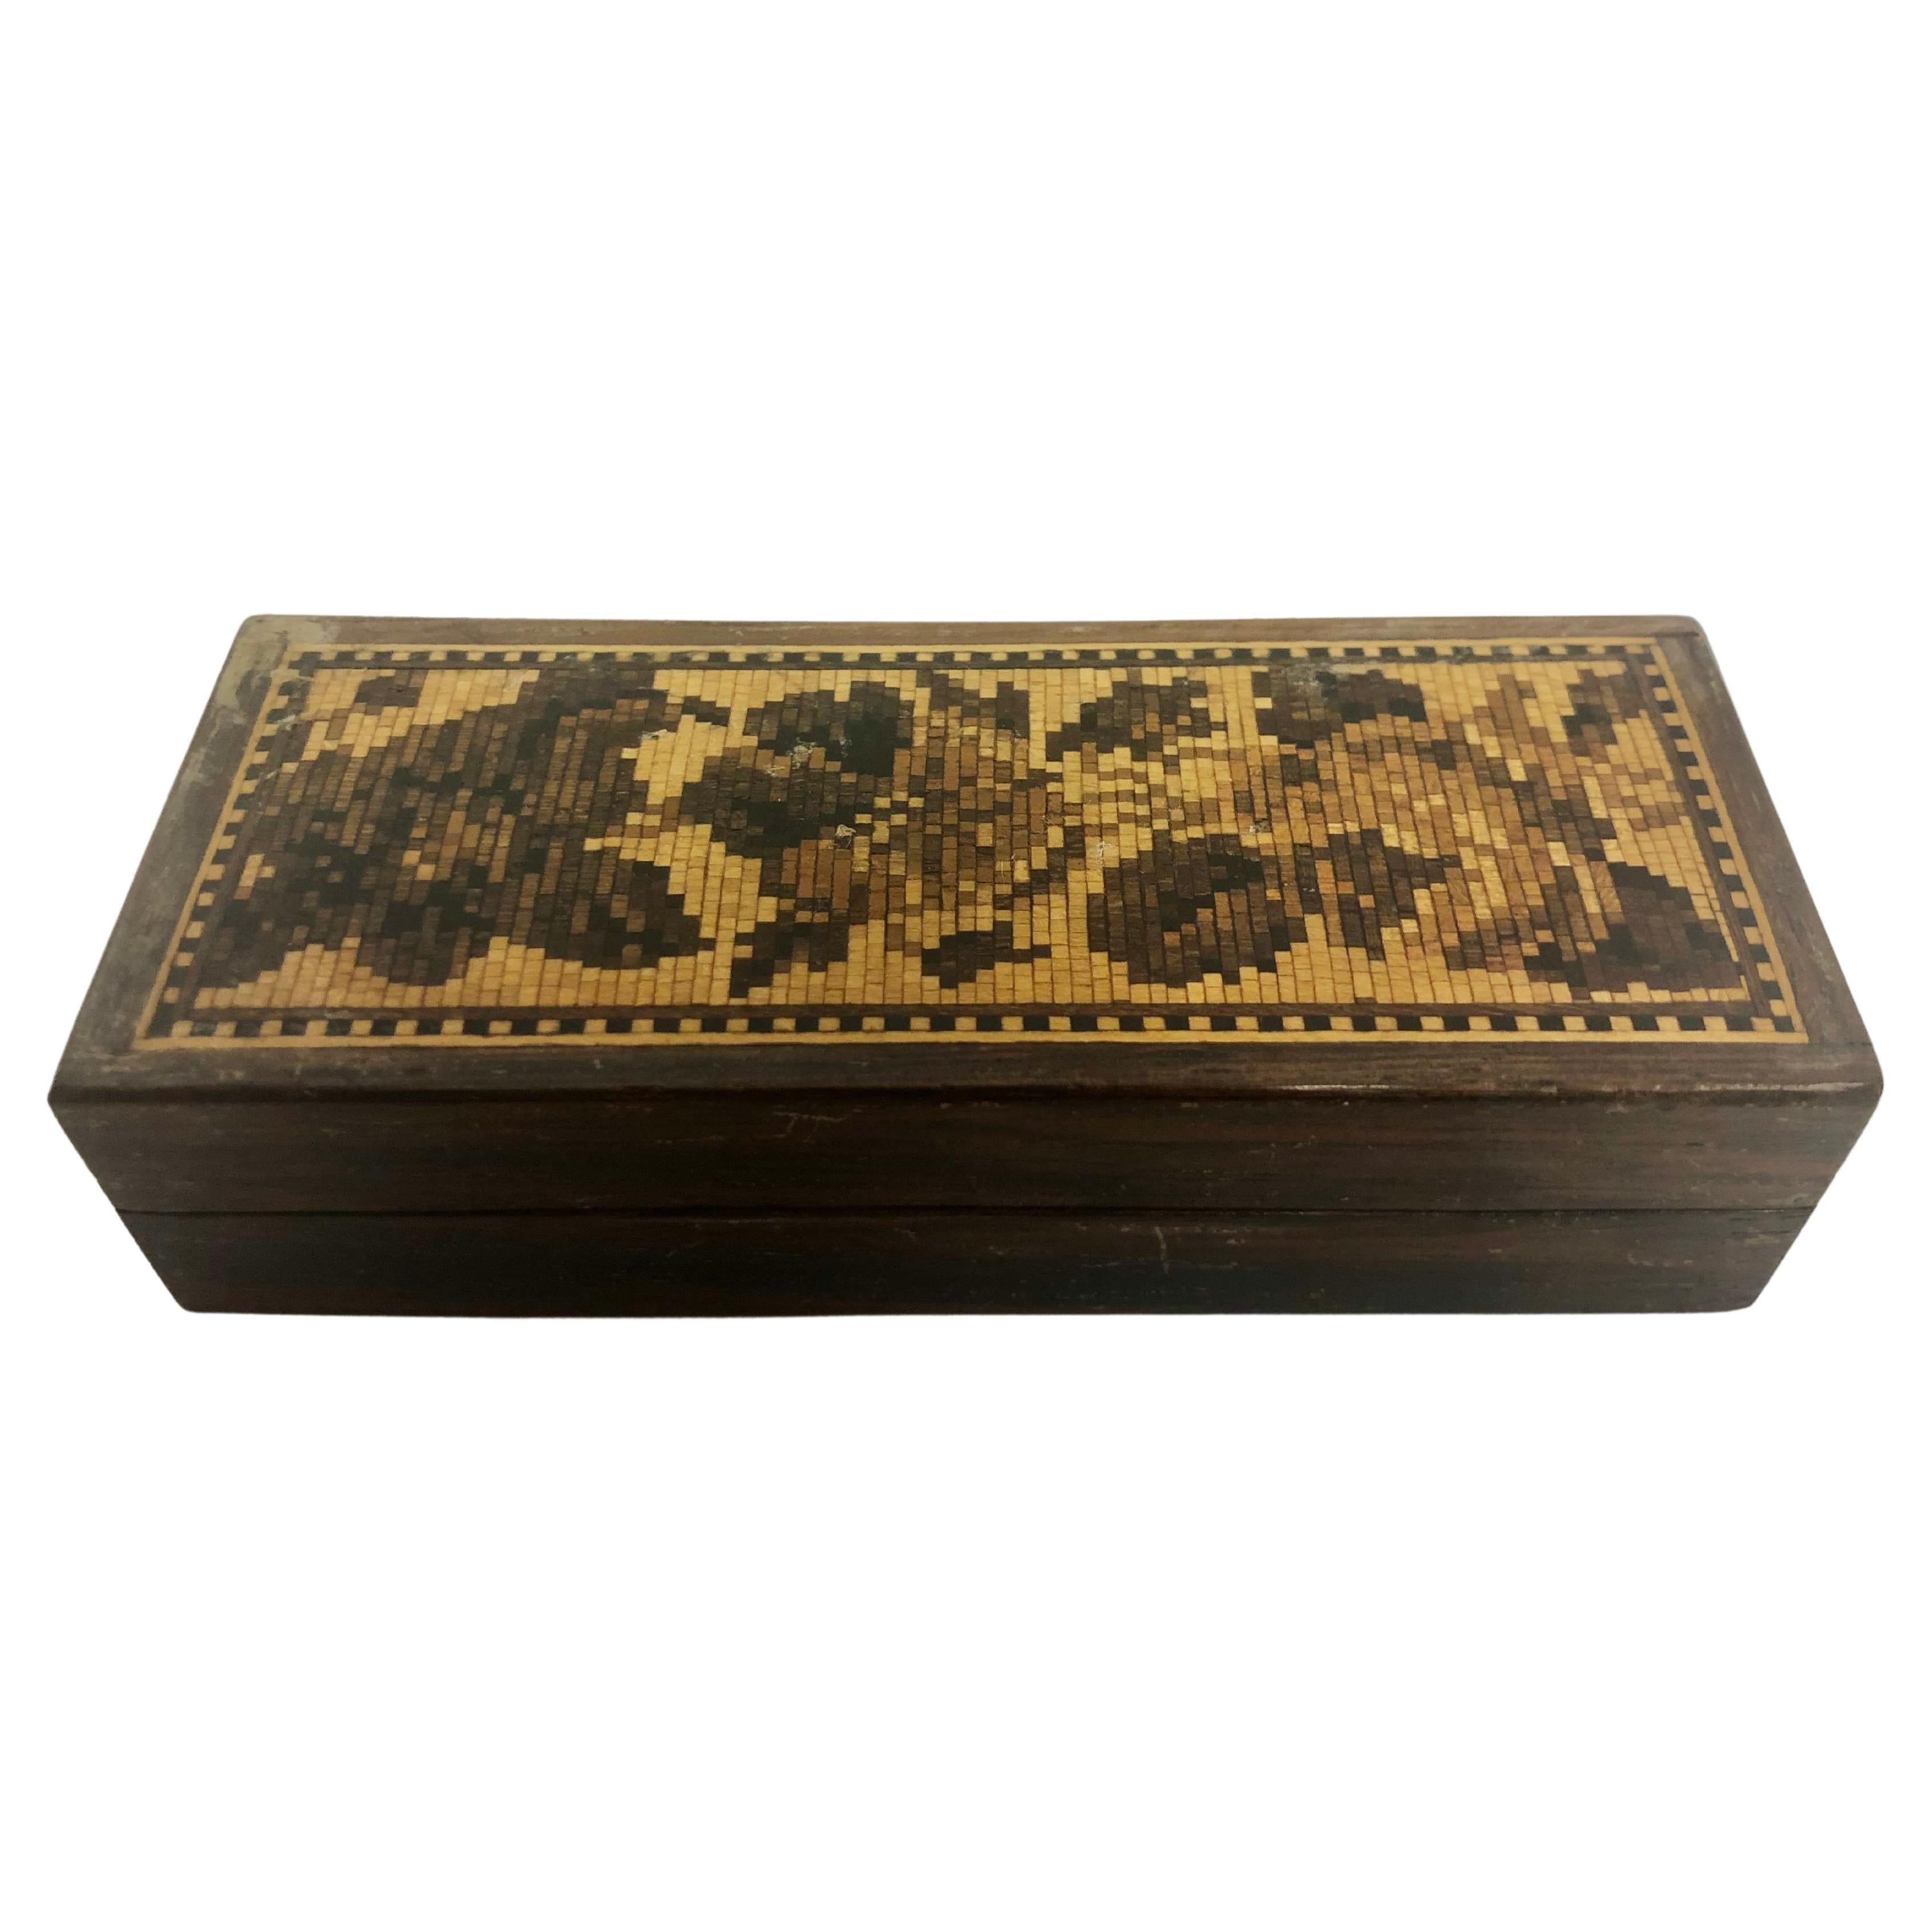 Tunbridge Wooden Trinket Box England, 1870s